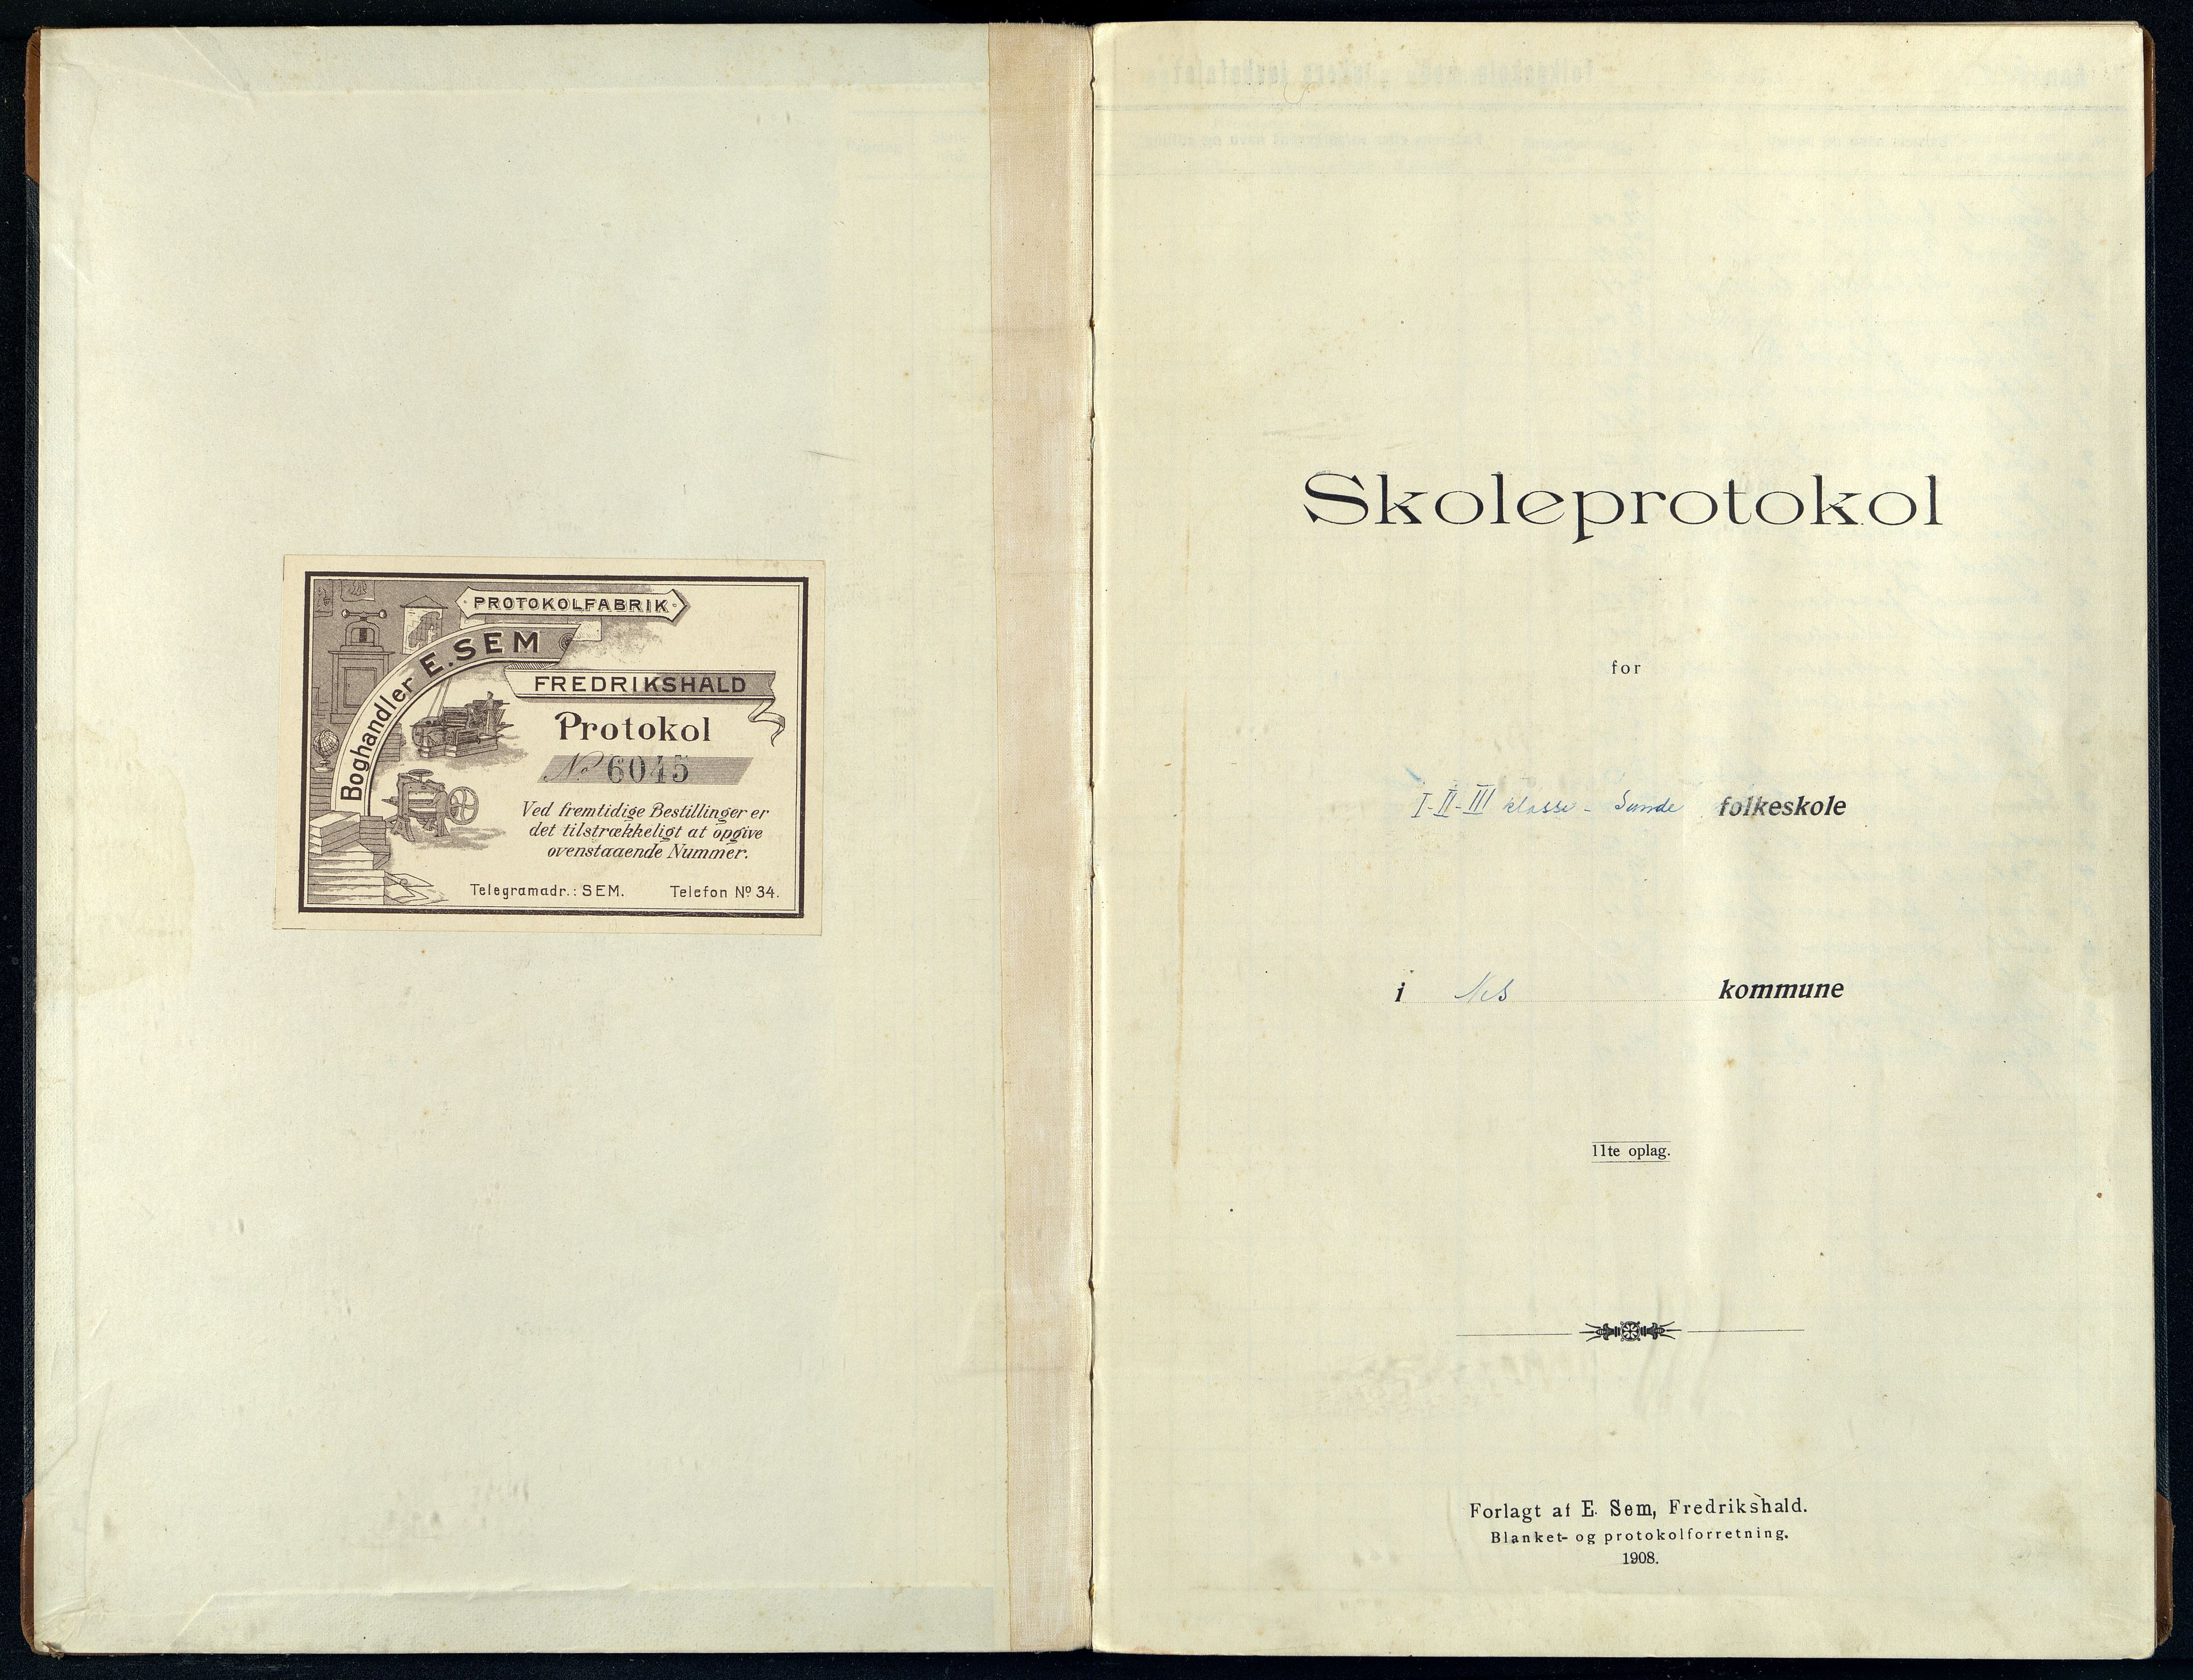 Nes kommune - Sunde Skole, IKAV/1004NE556/H/L0001: Skoleprotokoll, 1909-1917